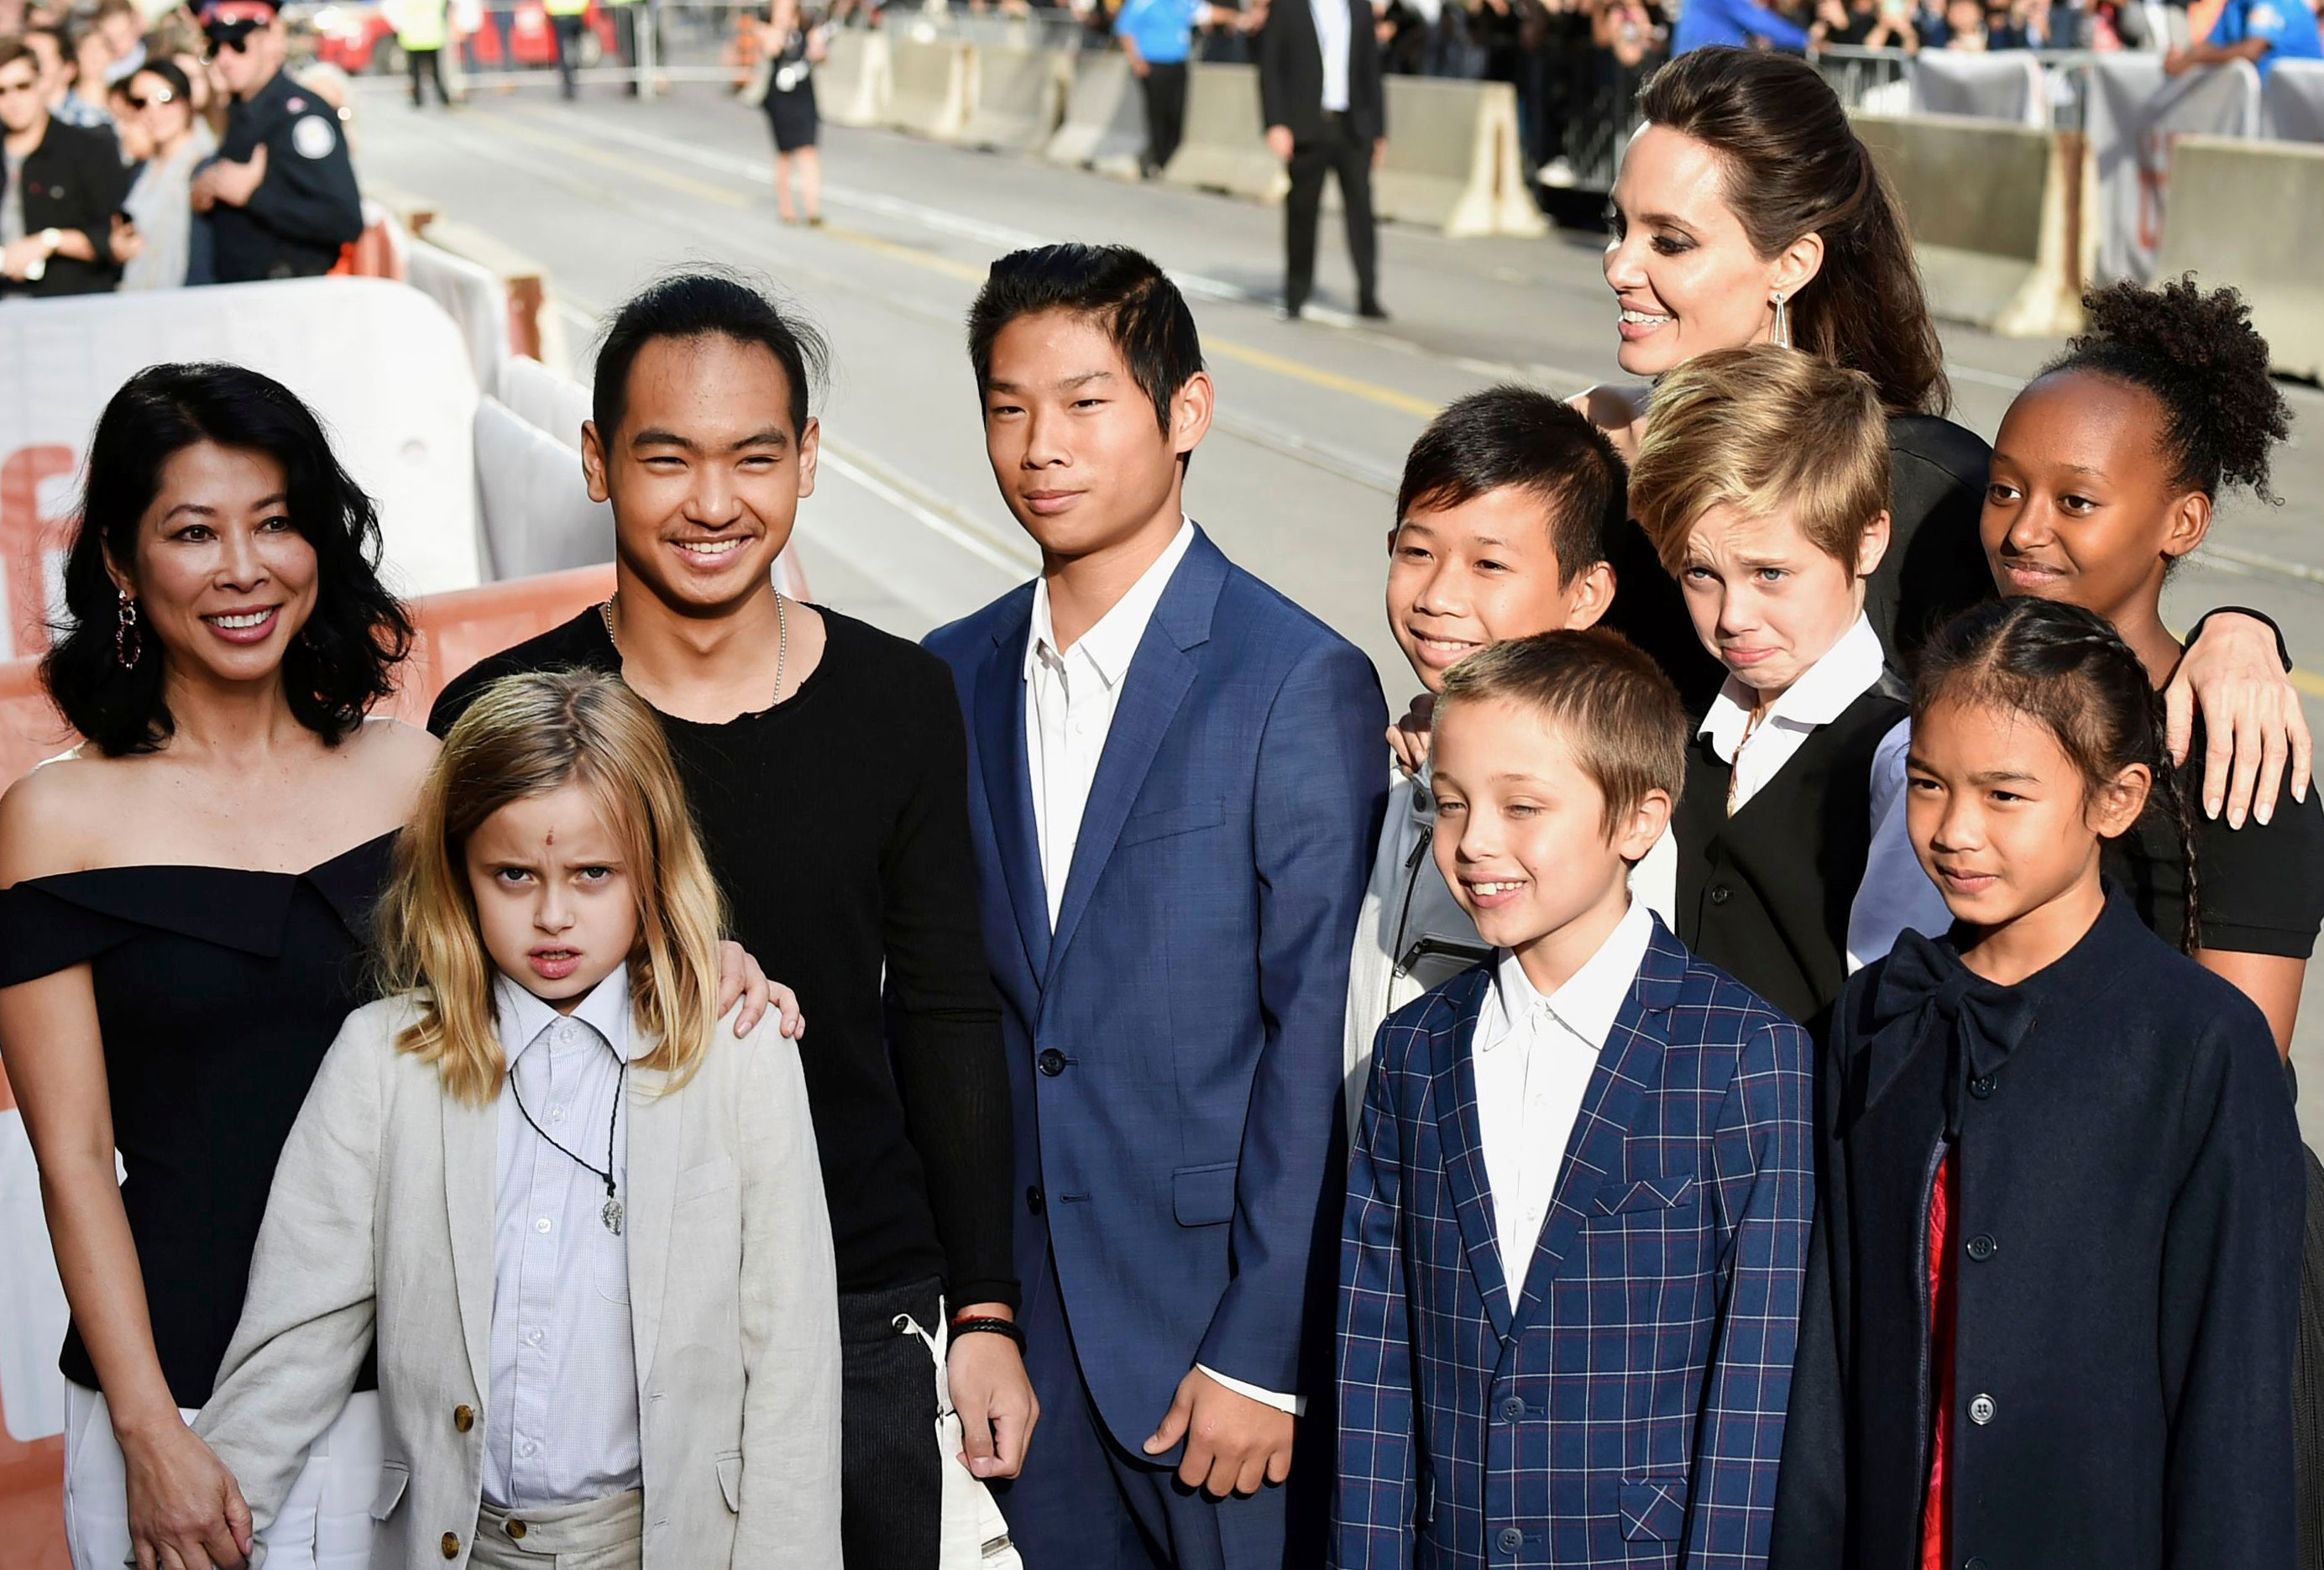 Brad Pitt, Angelina Jolie’s Family Album Pics With 6 Kids